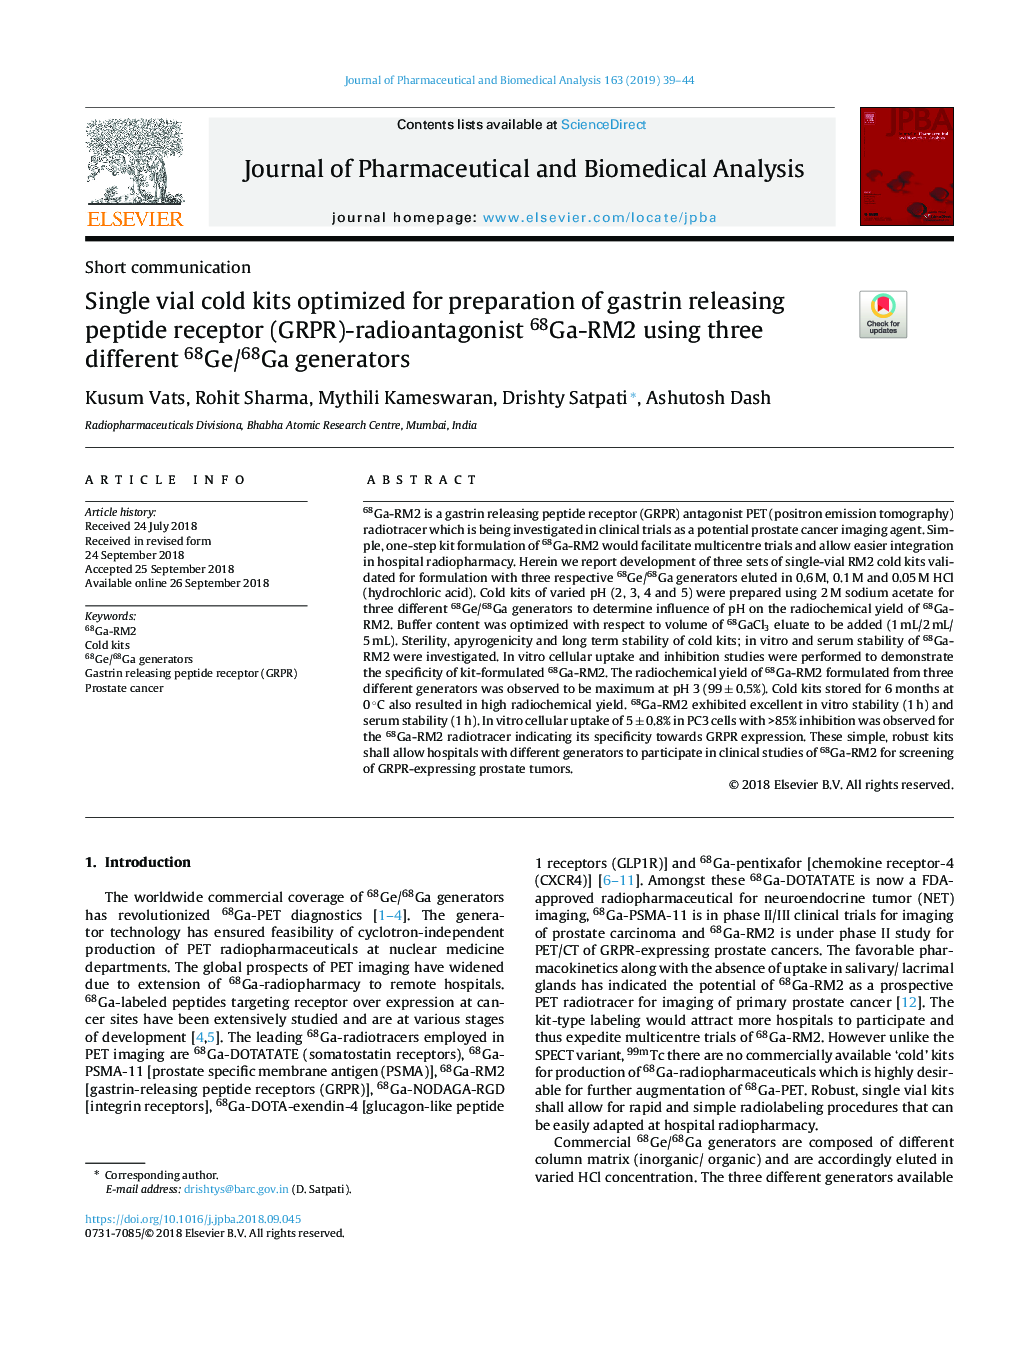 Single vial cold kits optimized for preparation of gastrin releasing peptide receptor (GRPR)-radioantagonist 68Ga-RM2 using three different 68Ge/68Ga generators